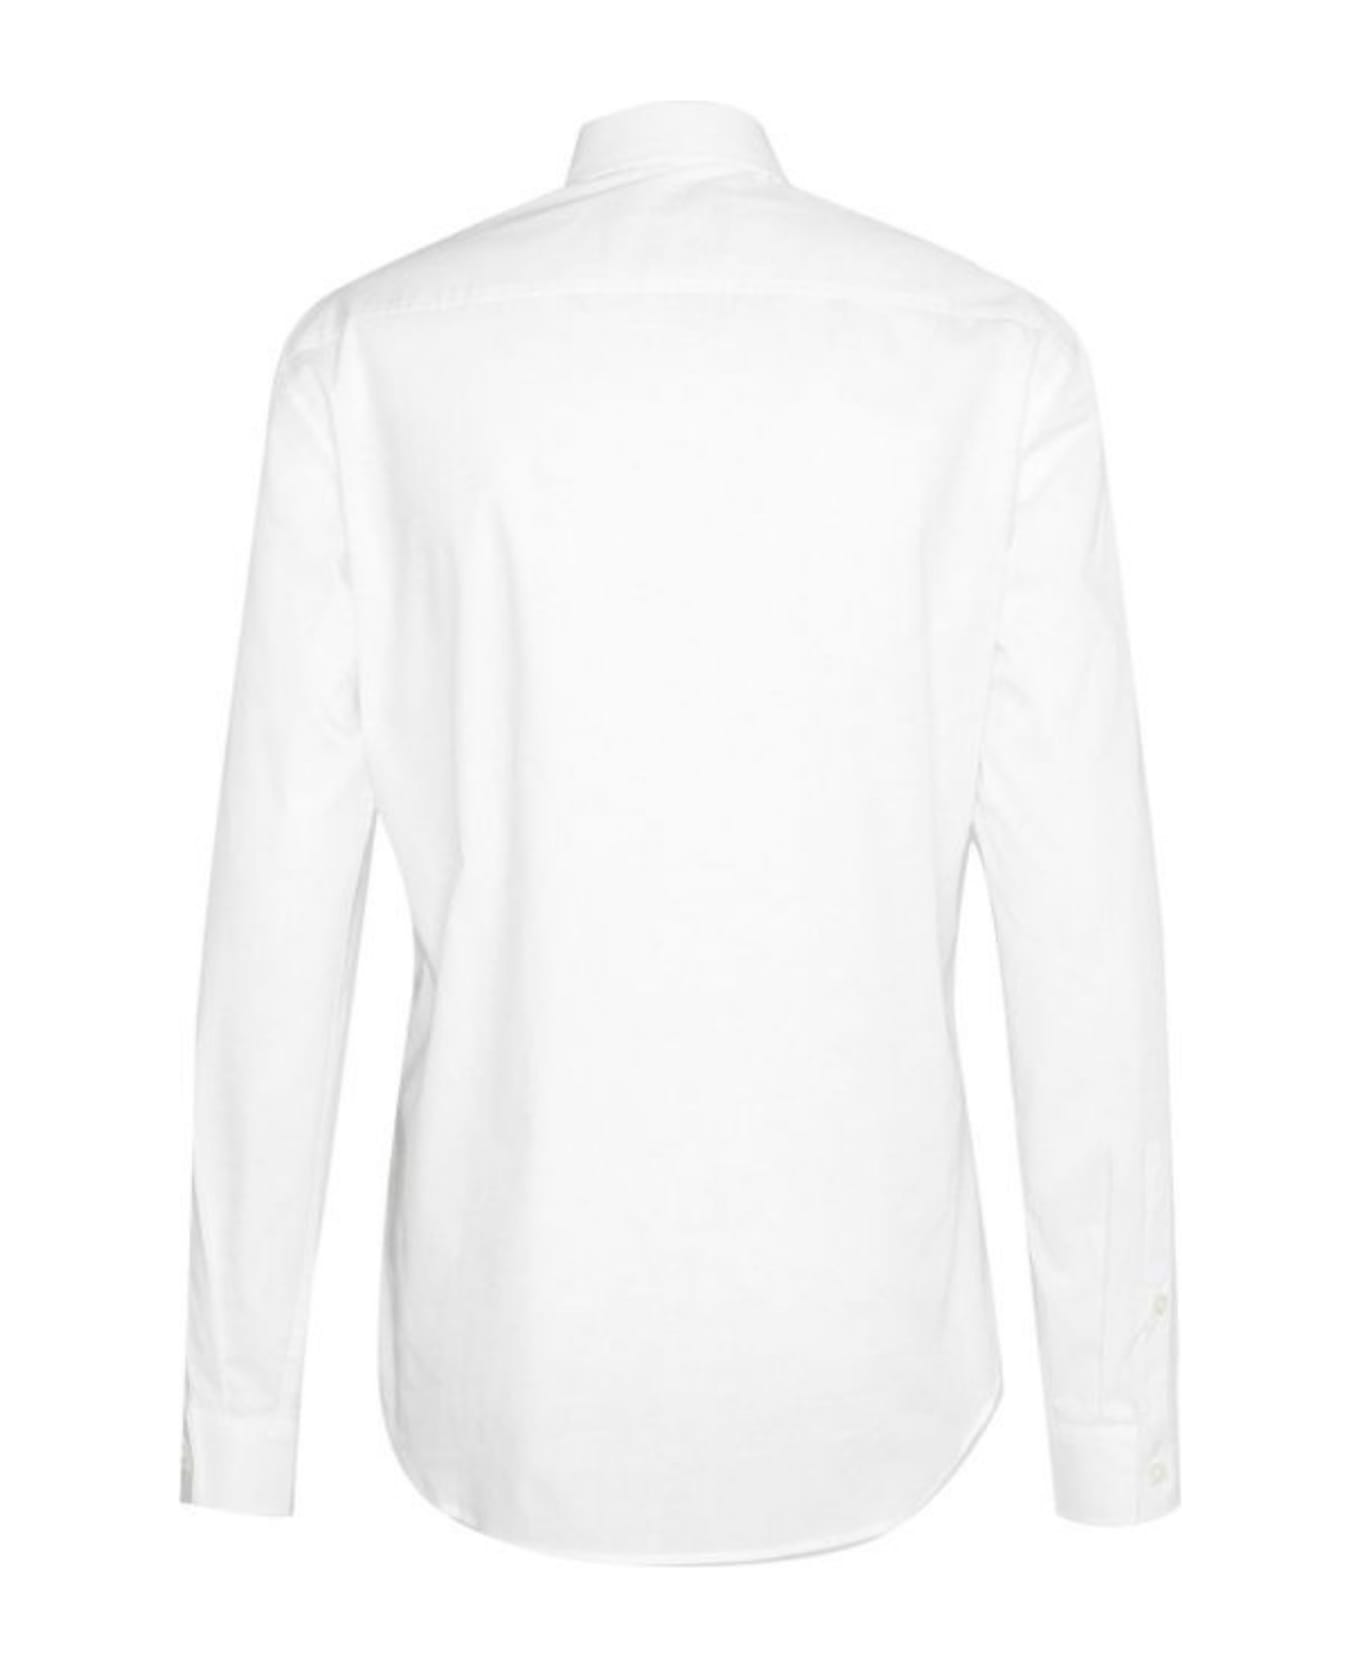 Just Cavalli Shirts White - White